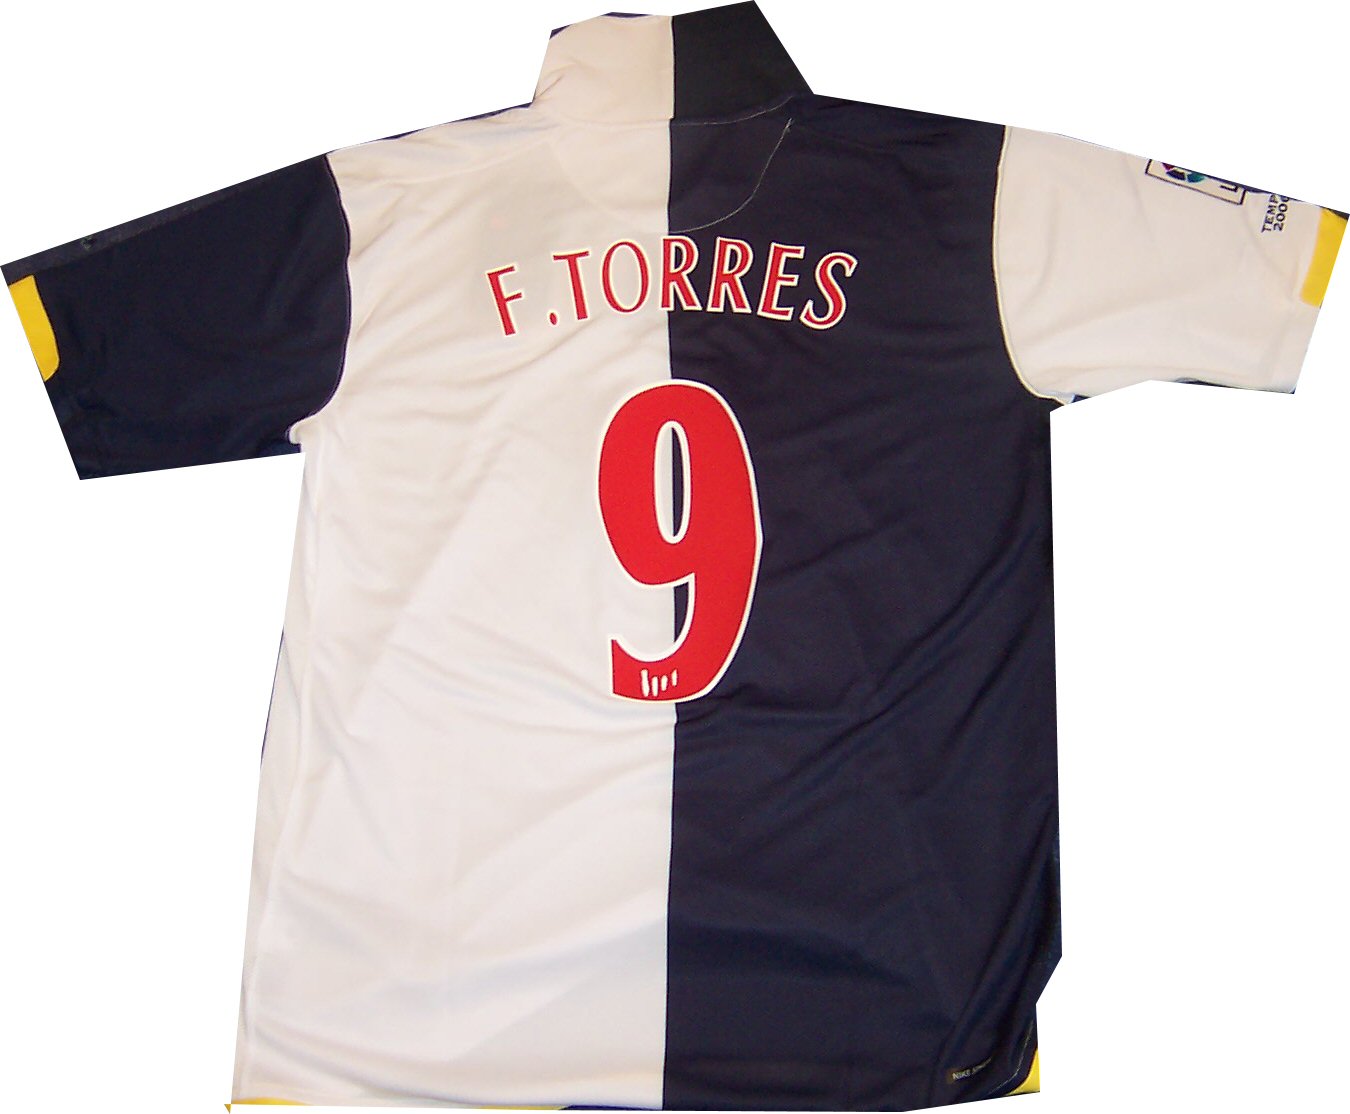 Torres Nike 06-07 Athletico Madrid away (F.Torres 9)